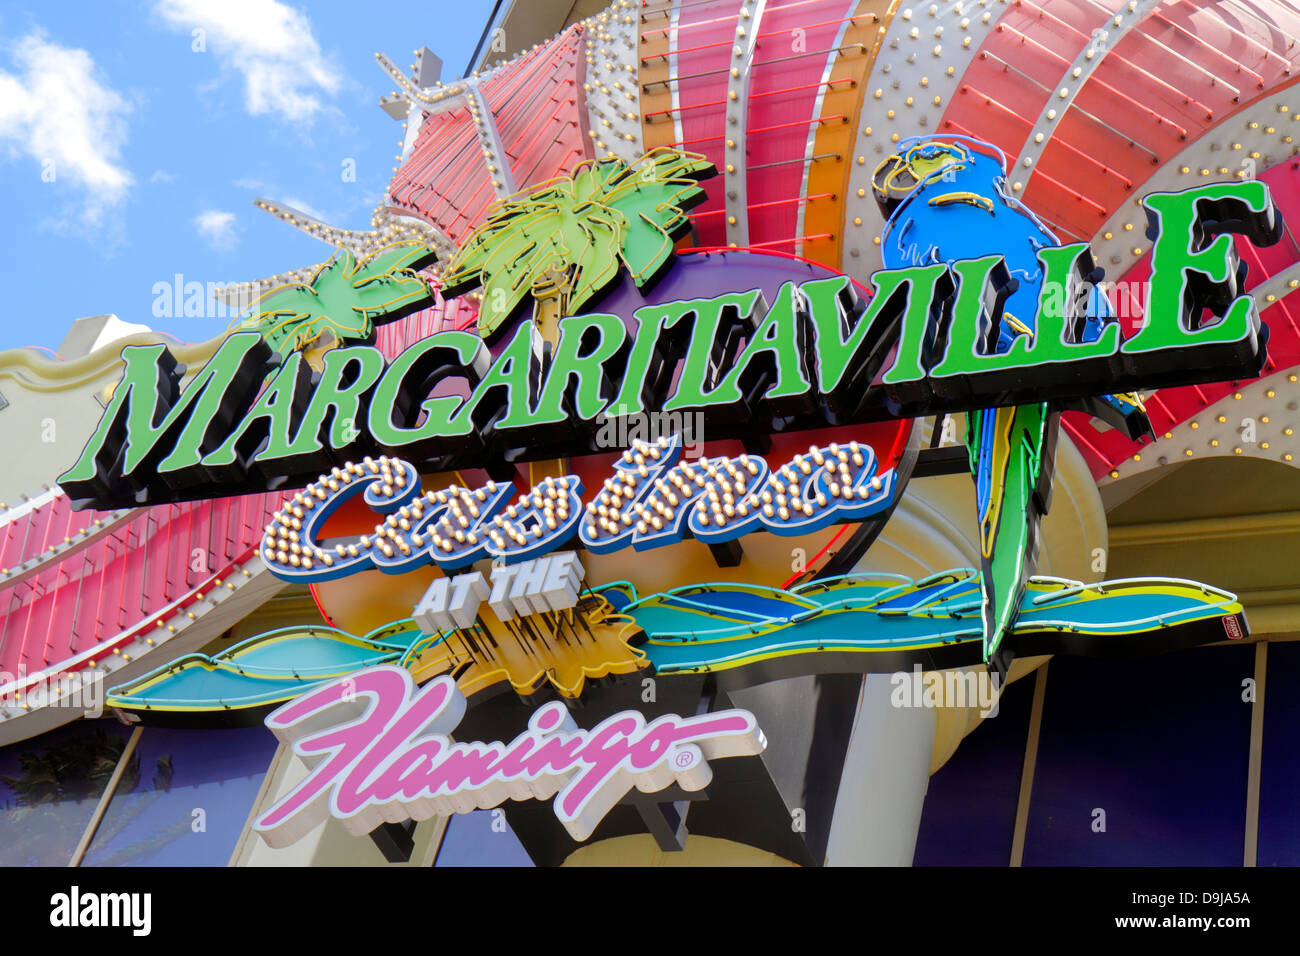 Las Vegas Nevada,The Strip,South Las Vegas Boulevard,Flamingo Las Vegas Hotel & Casino,Marg,Road,aritaville,neon,sign,NV130401013 Stock Photo